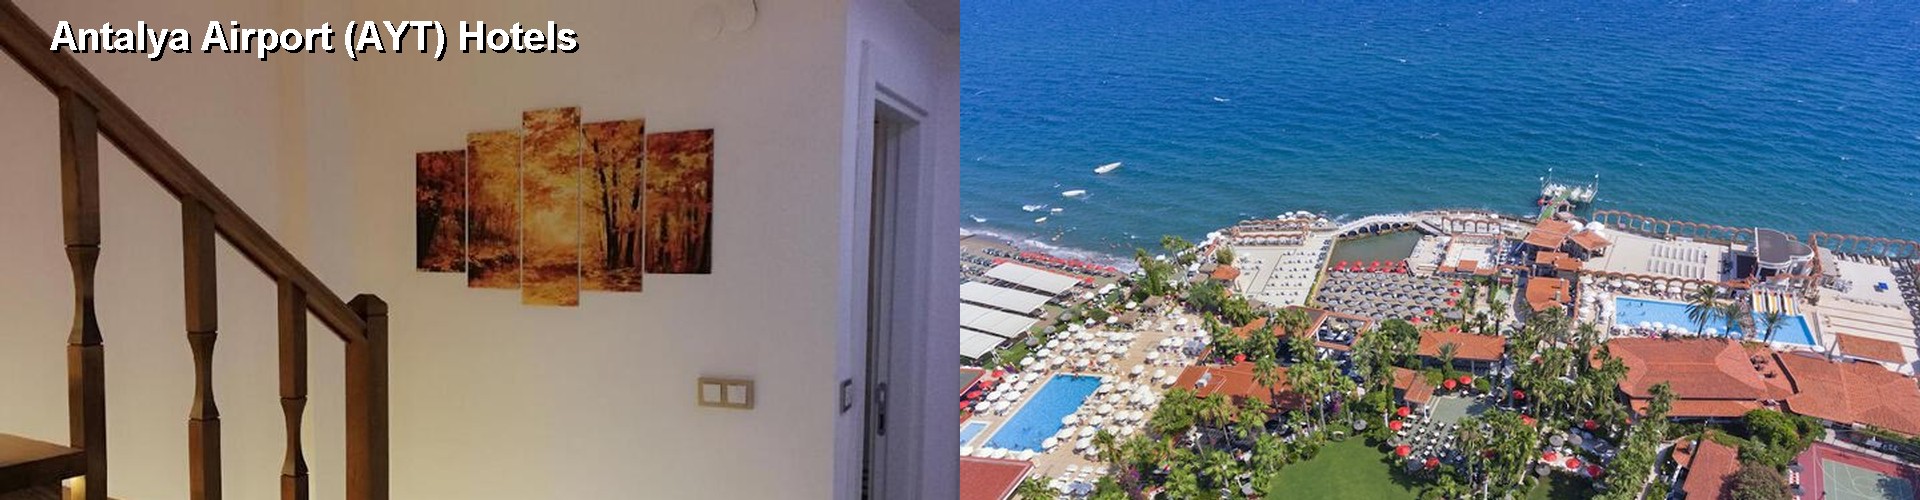 5 Best Hotels near Antalya Airport (AYT)